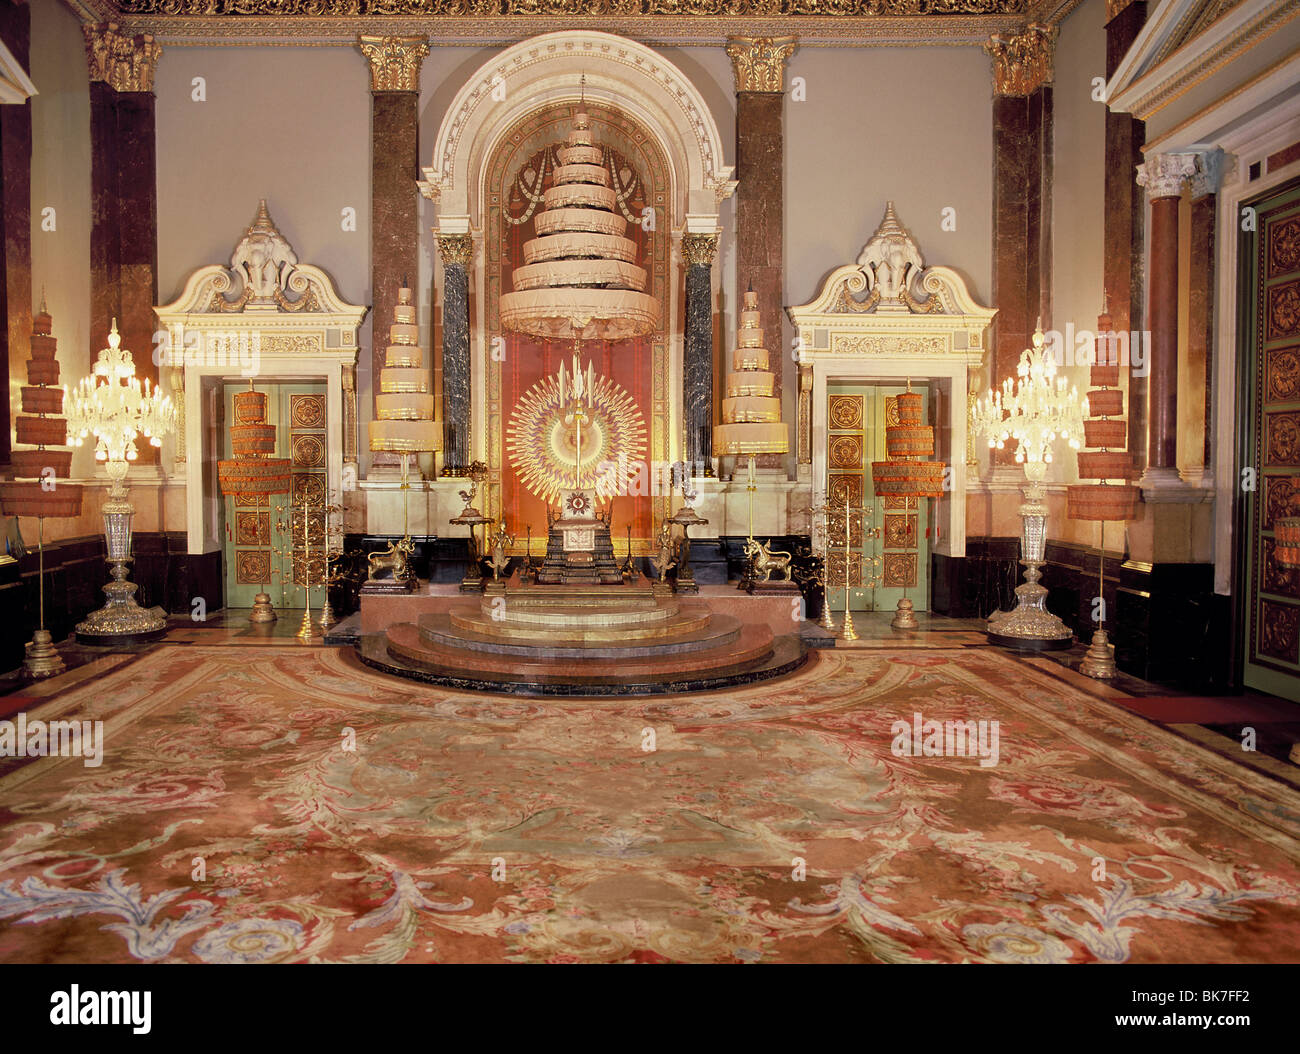 The Throne of the King of Thailand, Dusit Mahaprasat Throne Hall, Royal Palace, Bangkok, Thailand, Southeast Asia, Asia Stock Photo